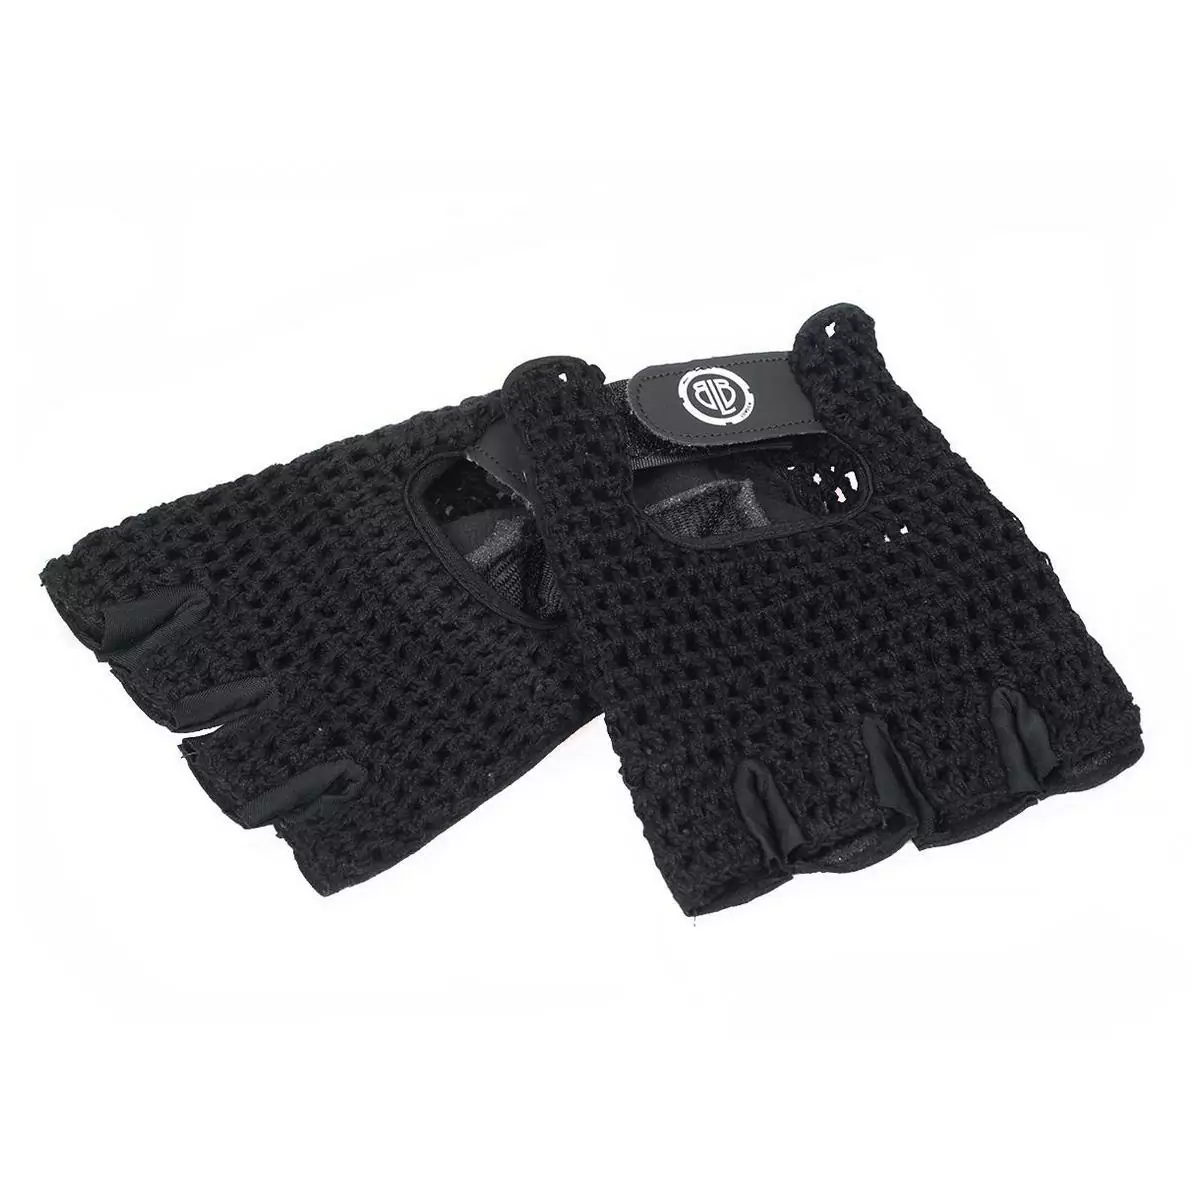 Vintage cycling gloves crochet string size M black - image